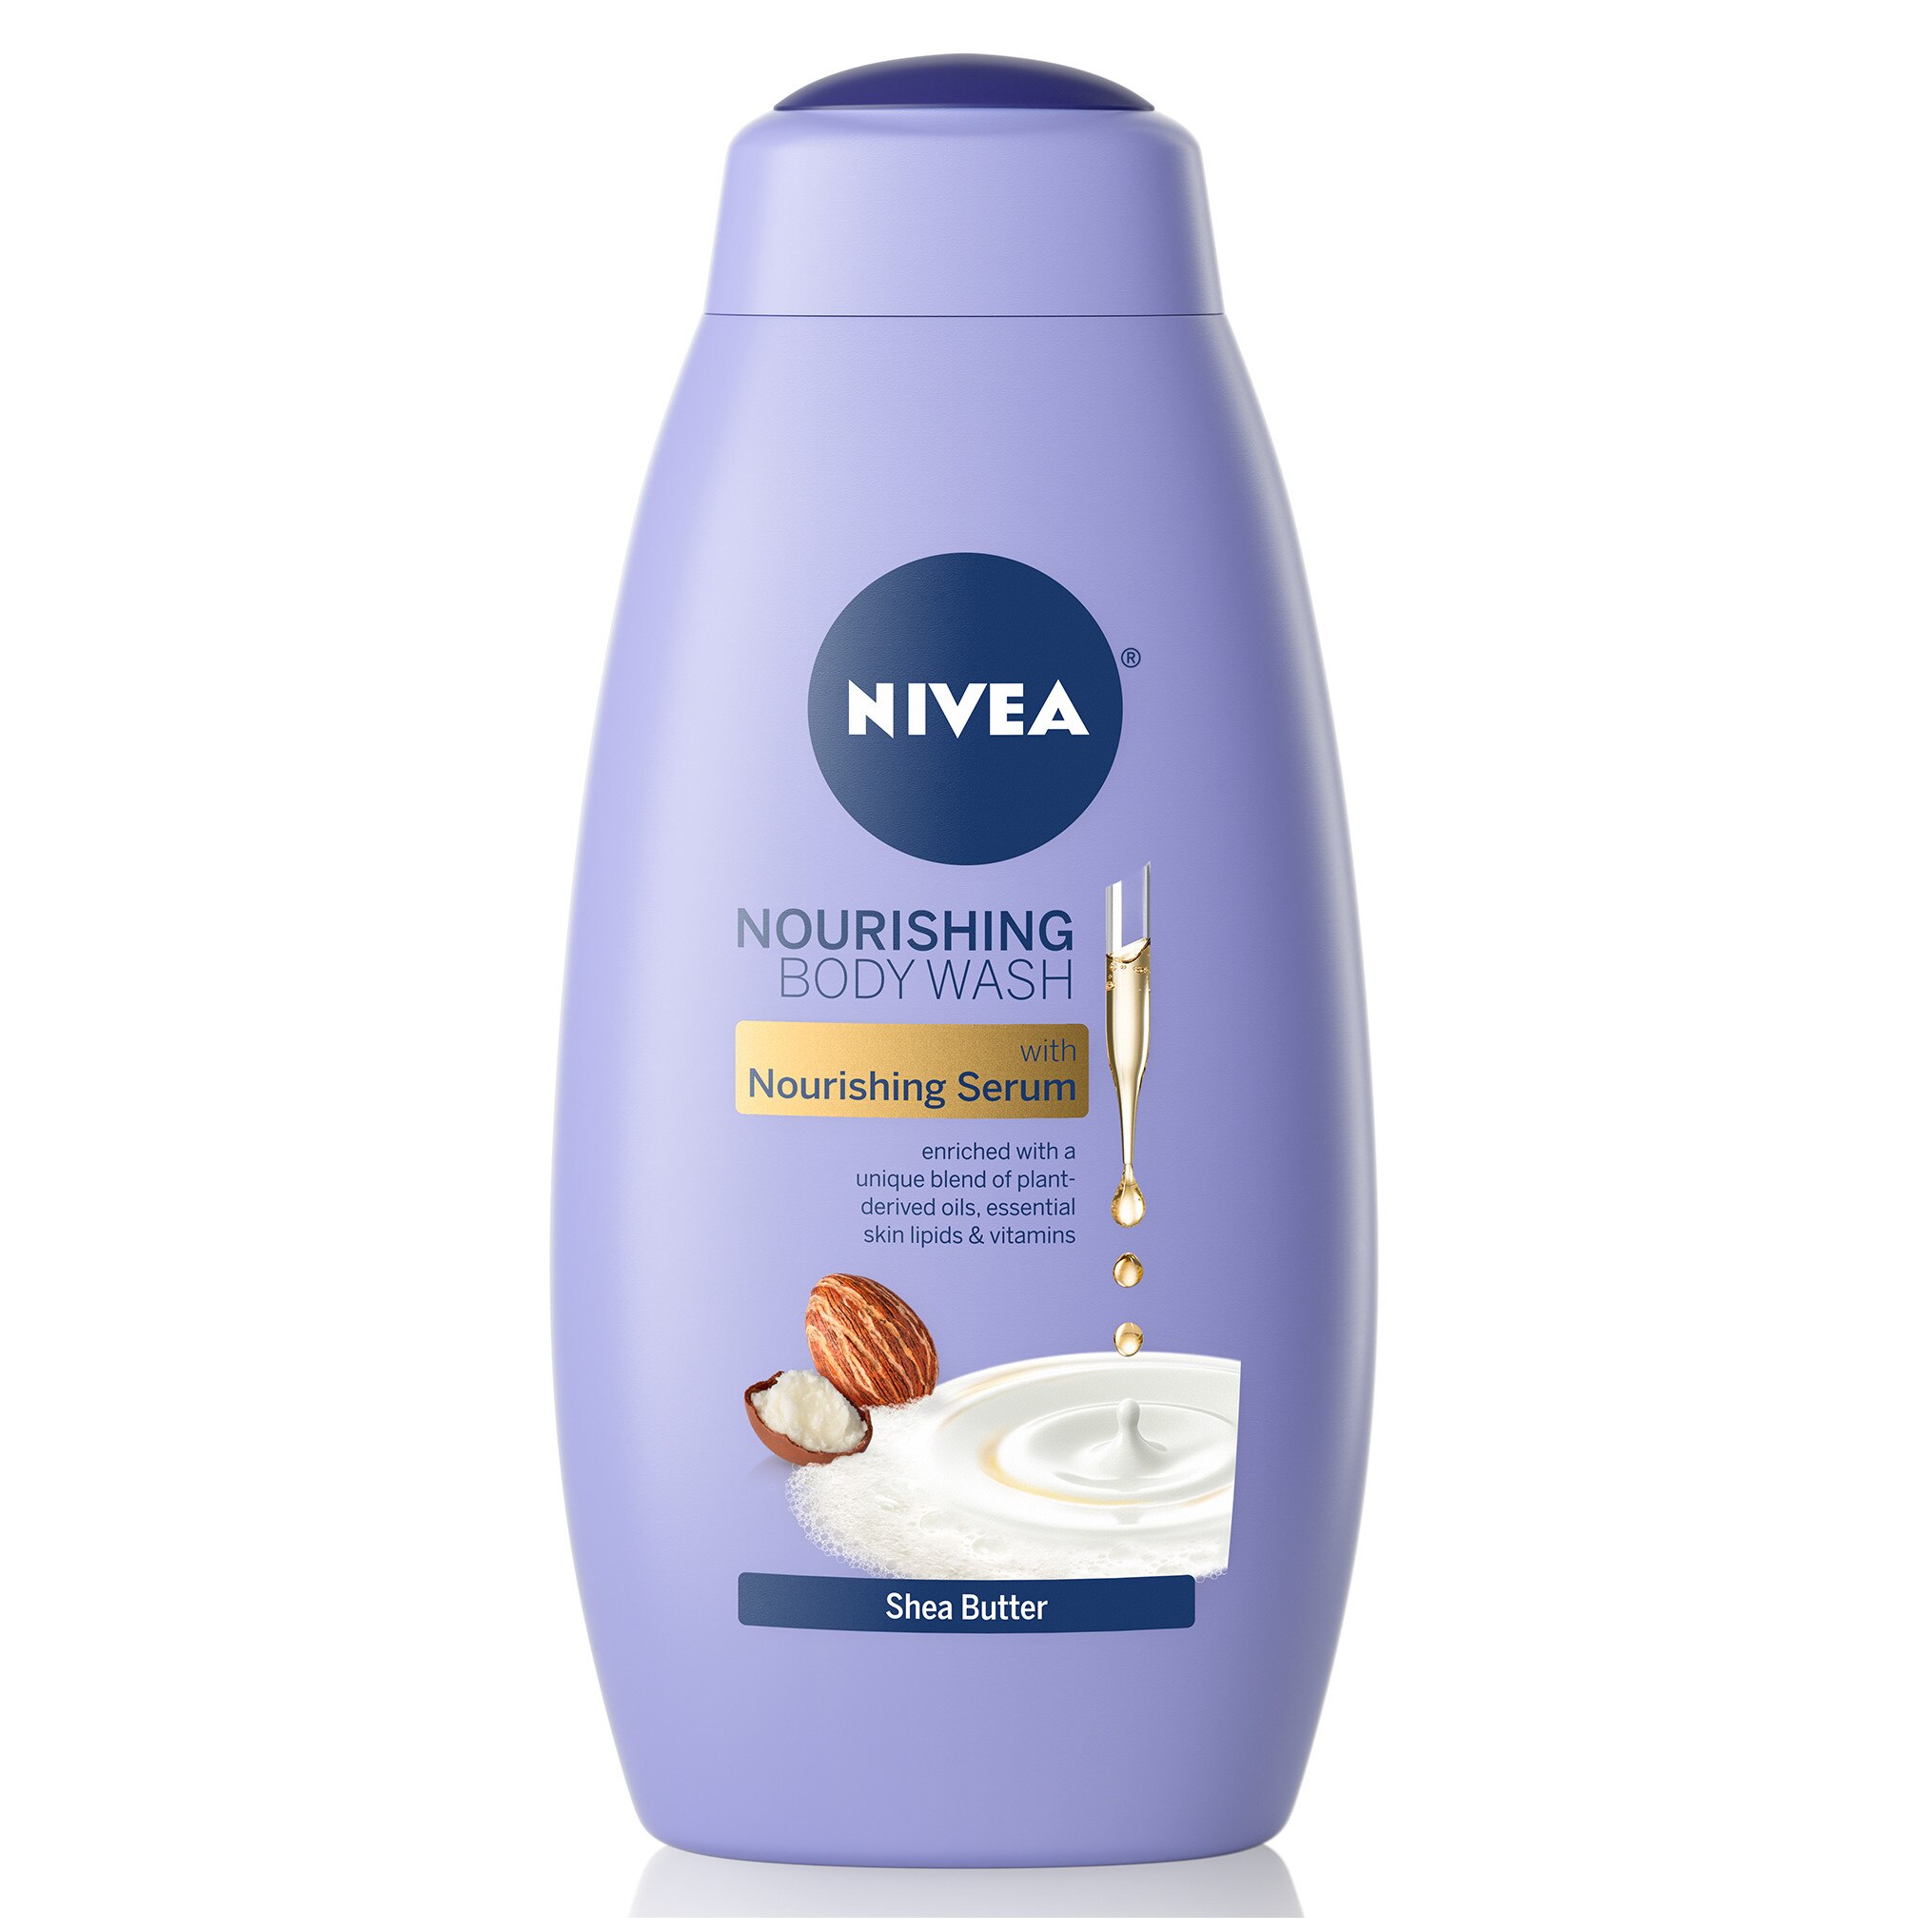 NIVEA Nourishing Care - Gel de baño con suero nutritivo, 20 oz